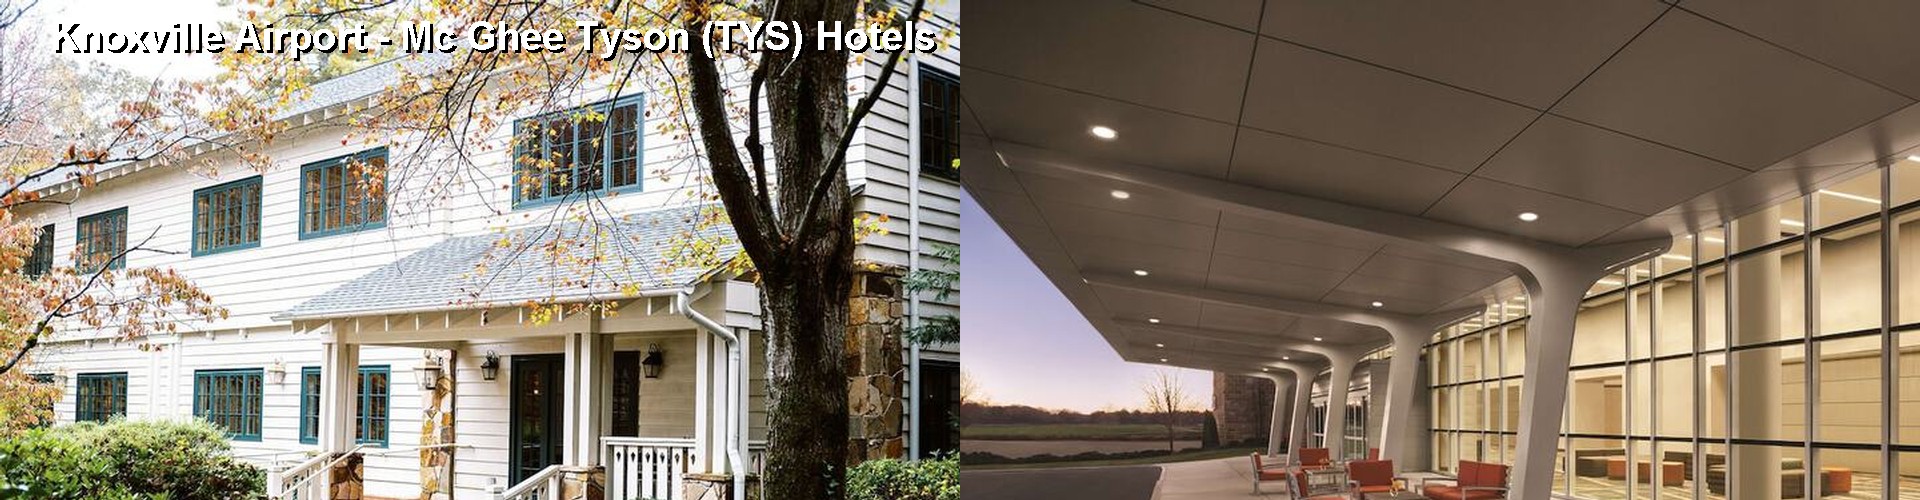 5 Best Hotels near Knoxville Airport - Mc Ghee Tyson (TYS)